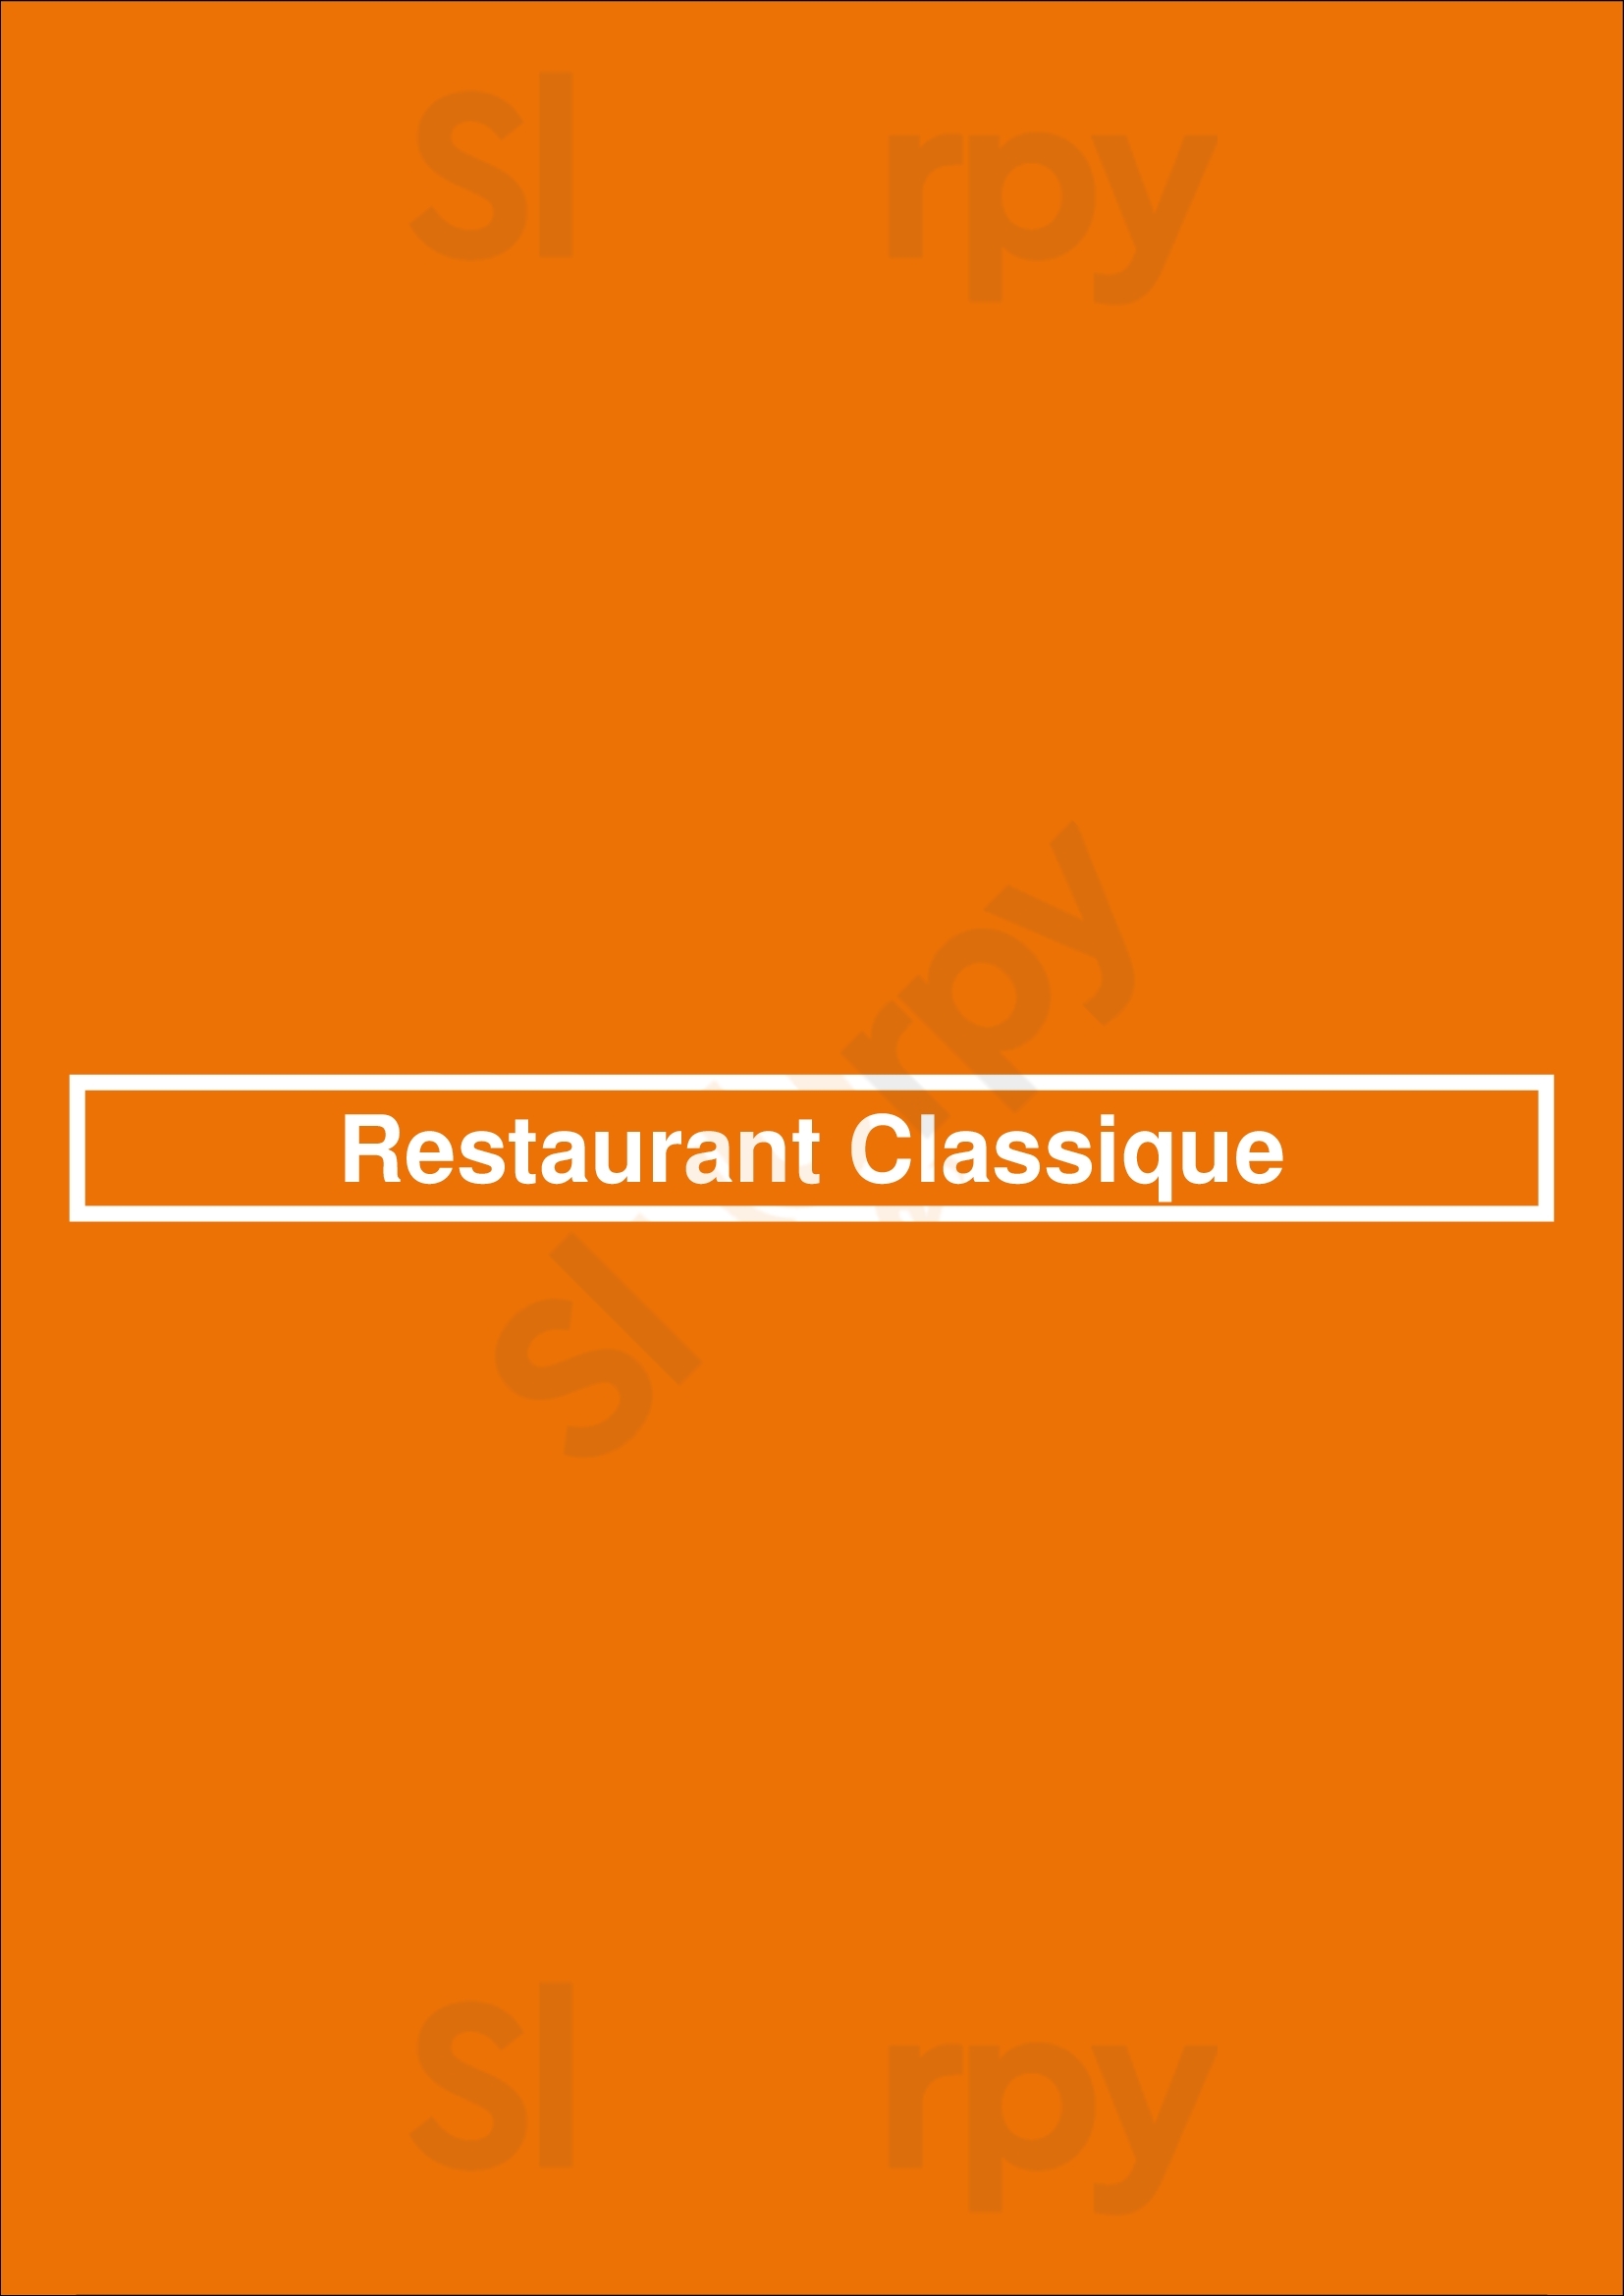 Restaurant Classique Groningen Menu - 1